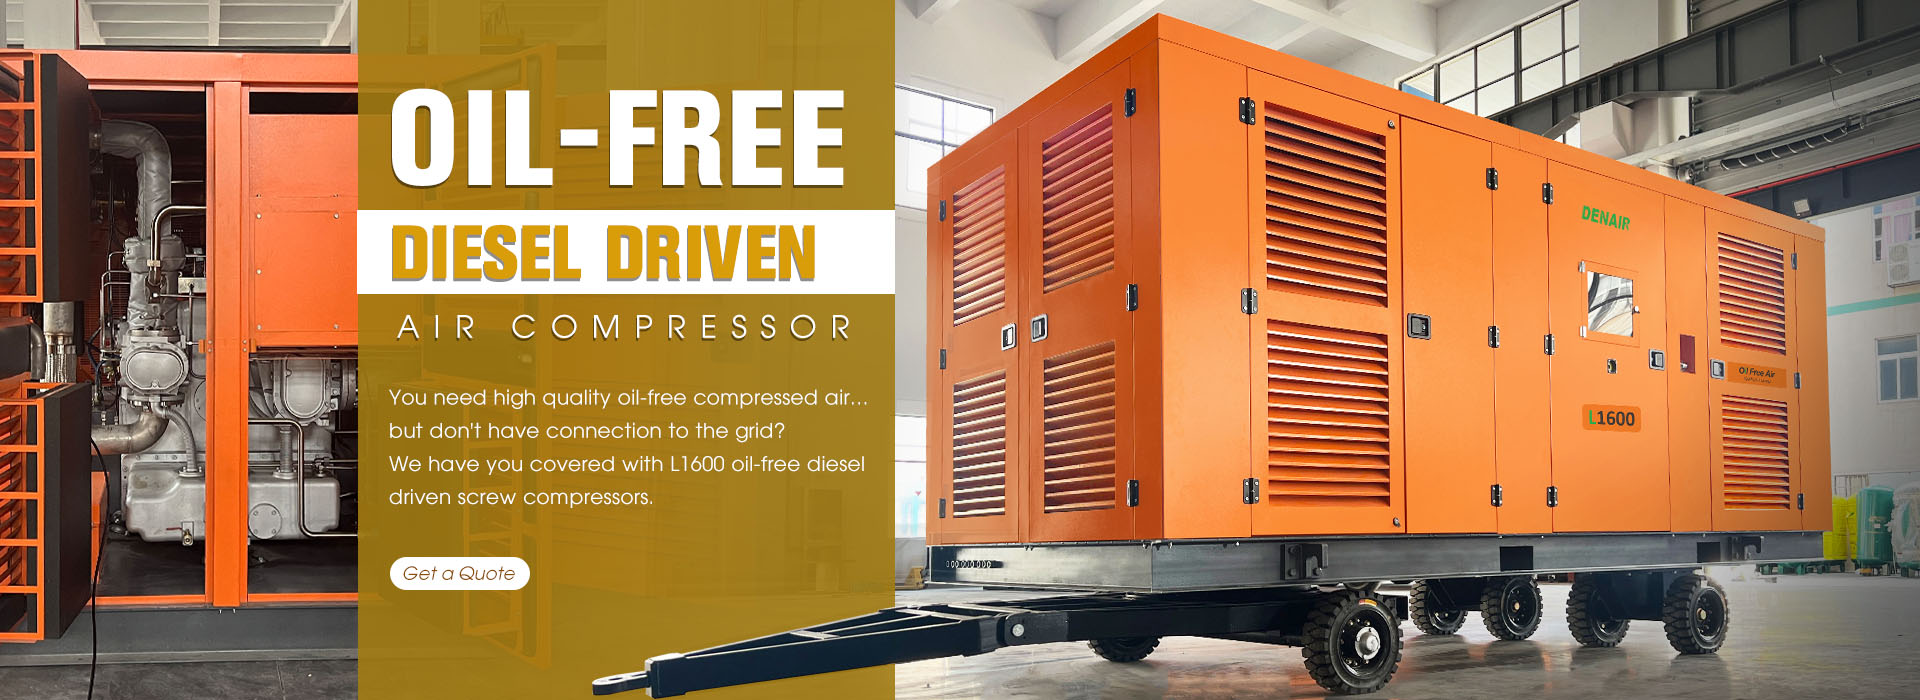 Oil-free Diesel Driven Air compressor